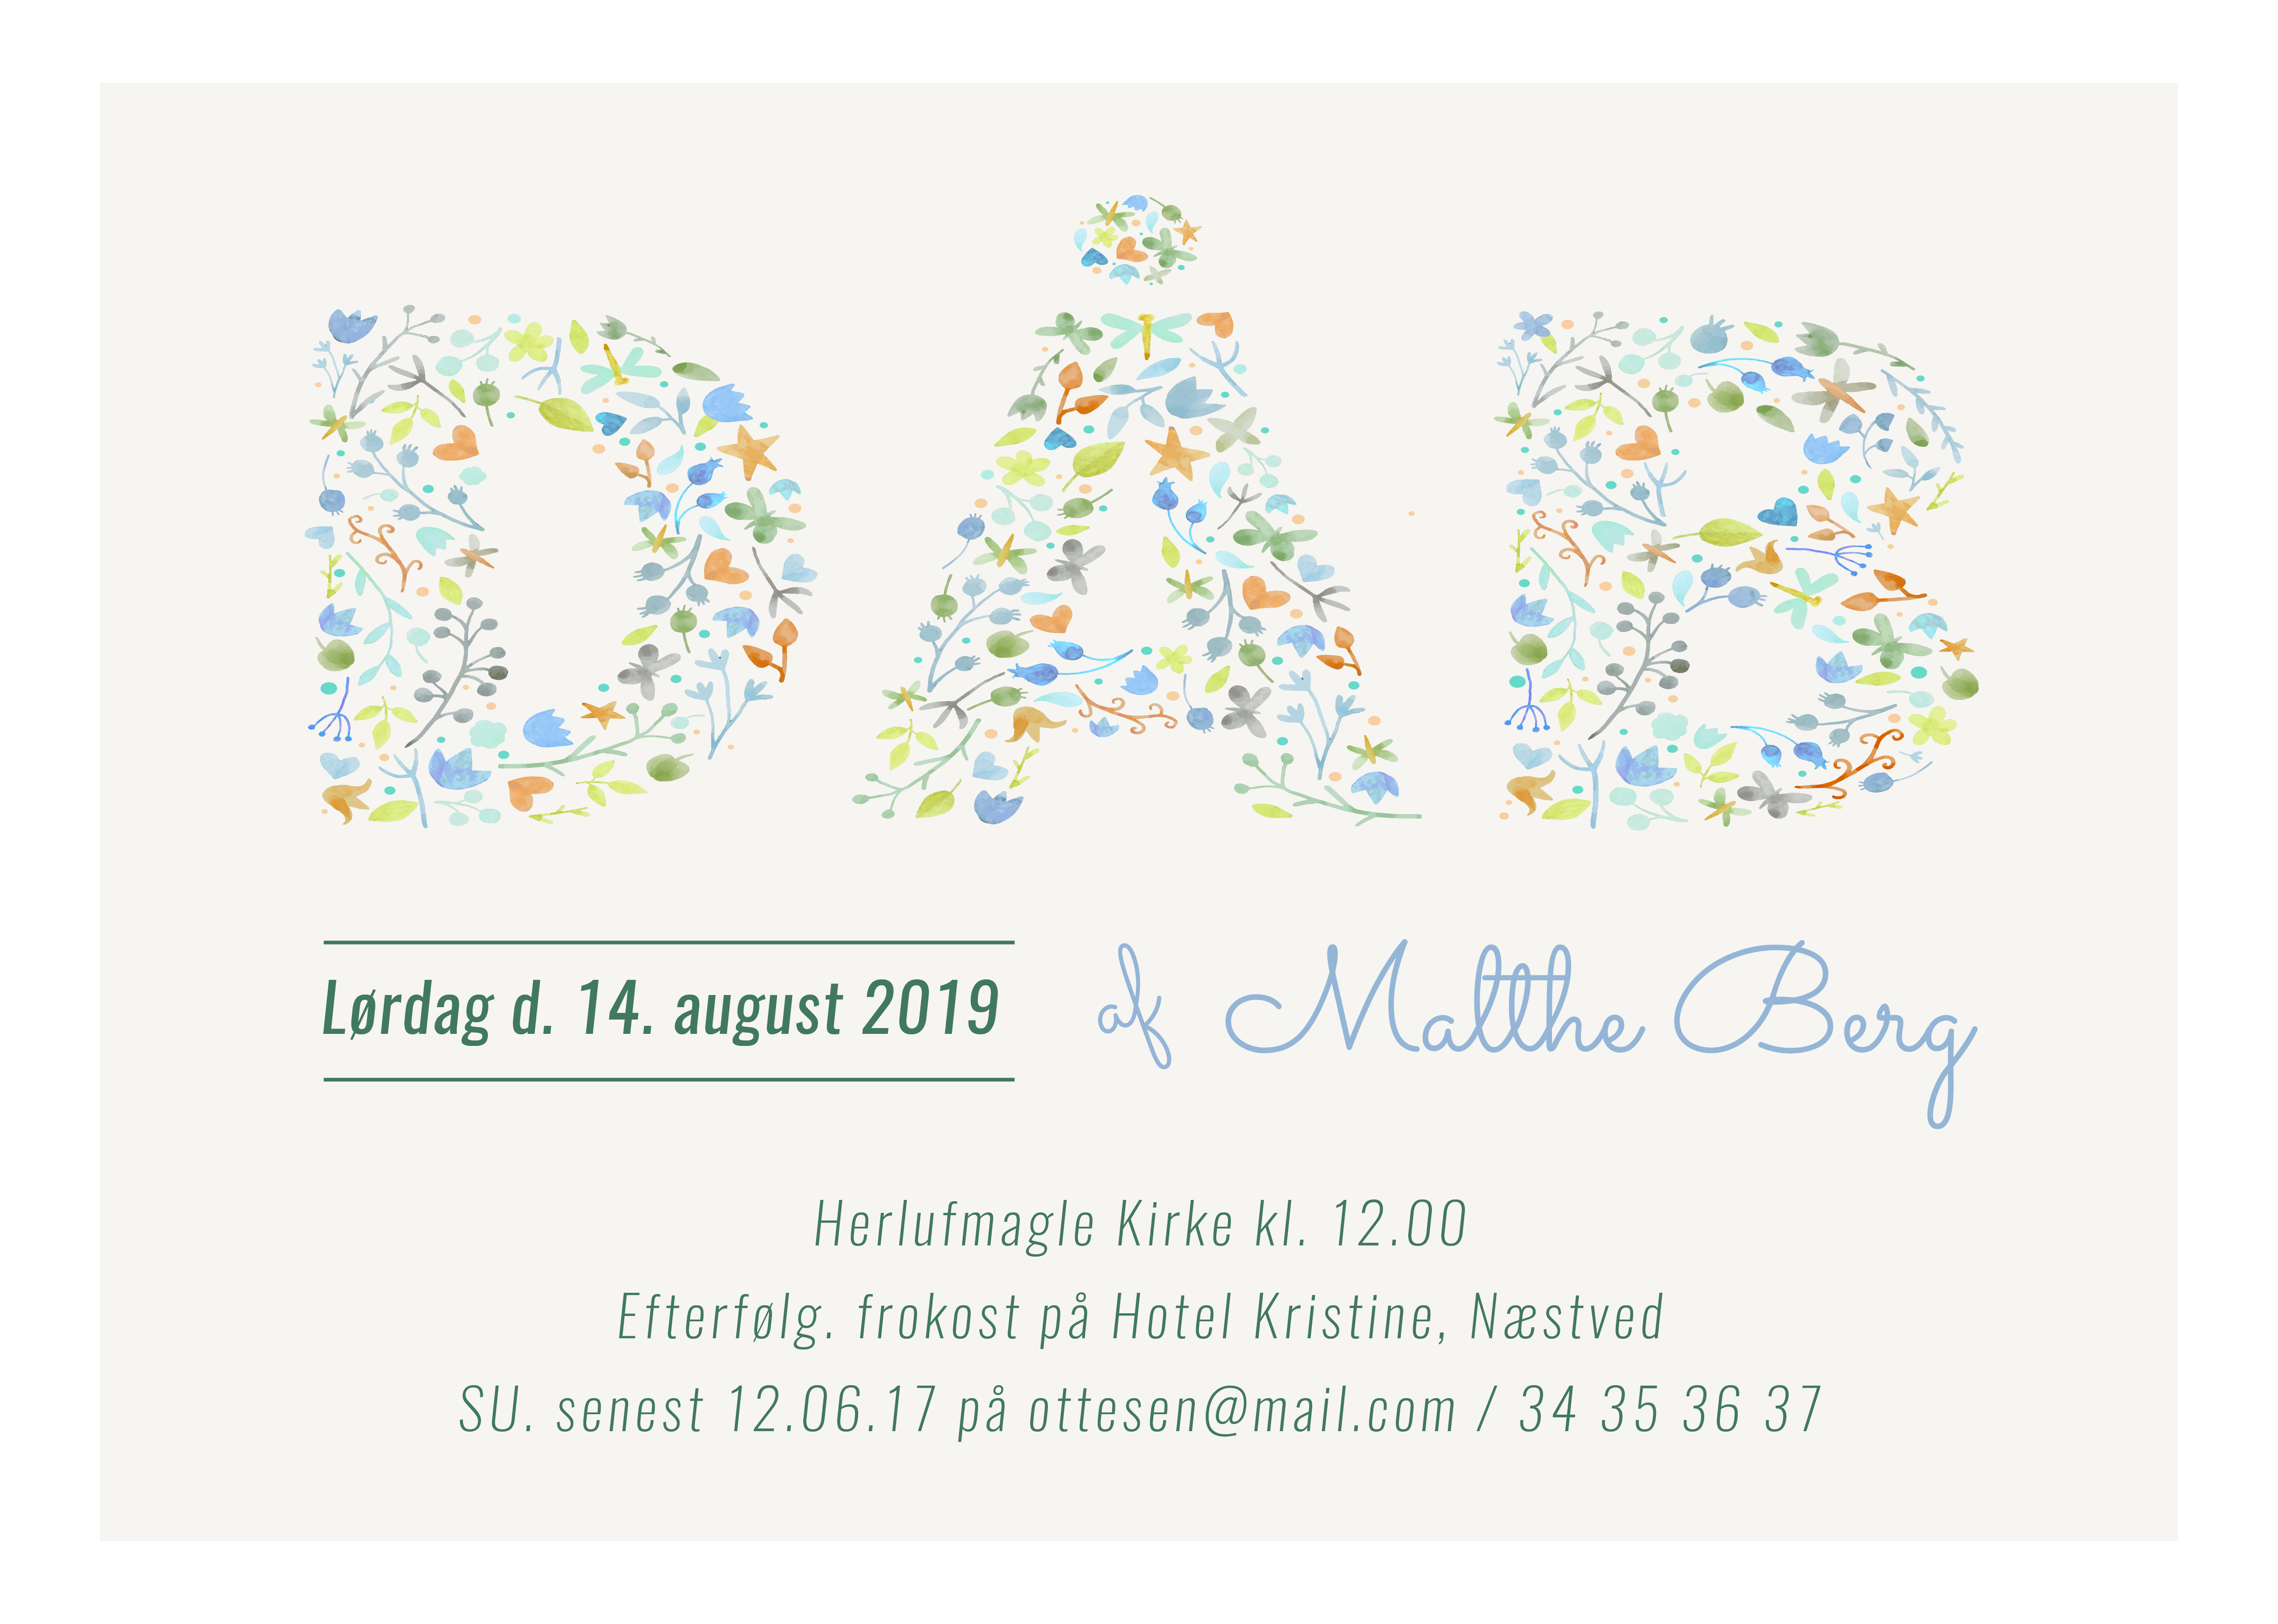 Invitationer - Malthe Berg